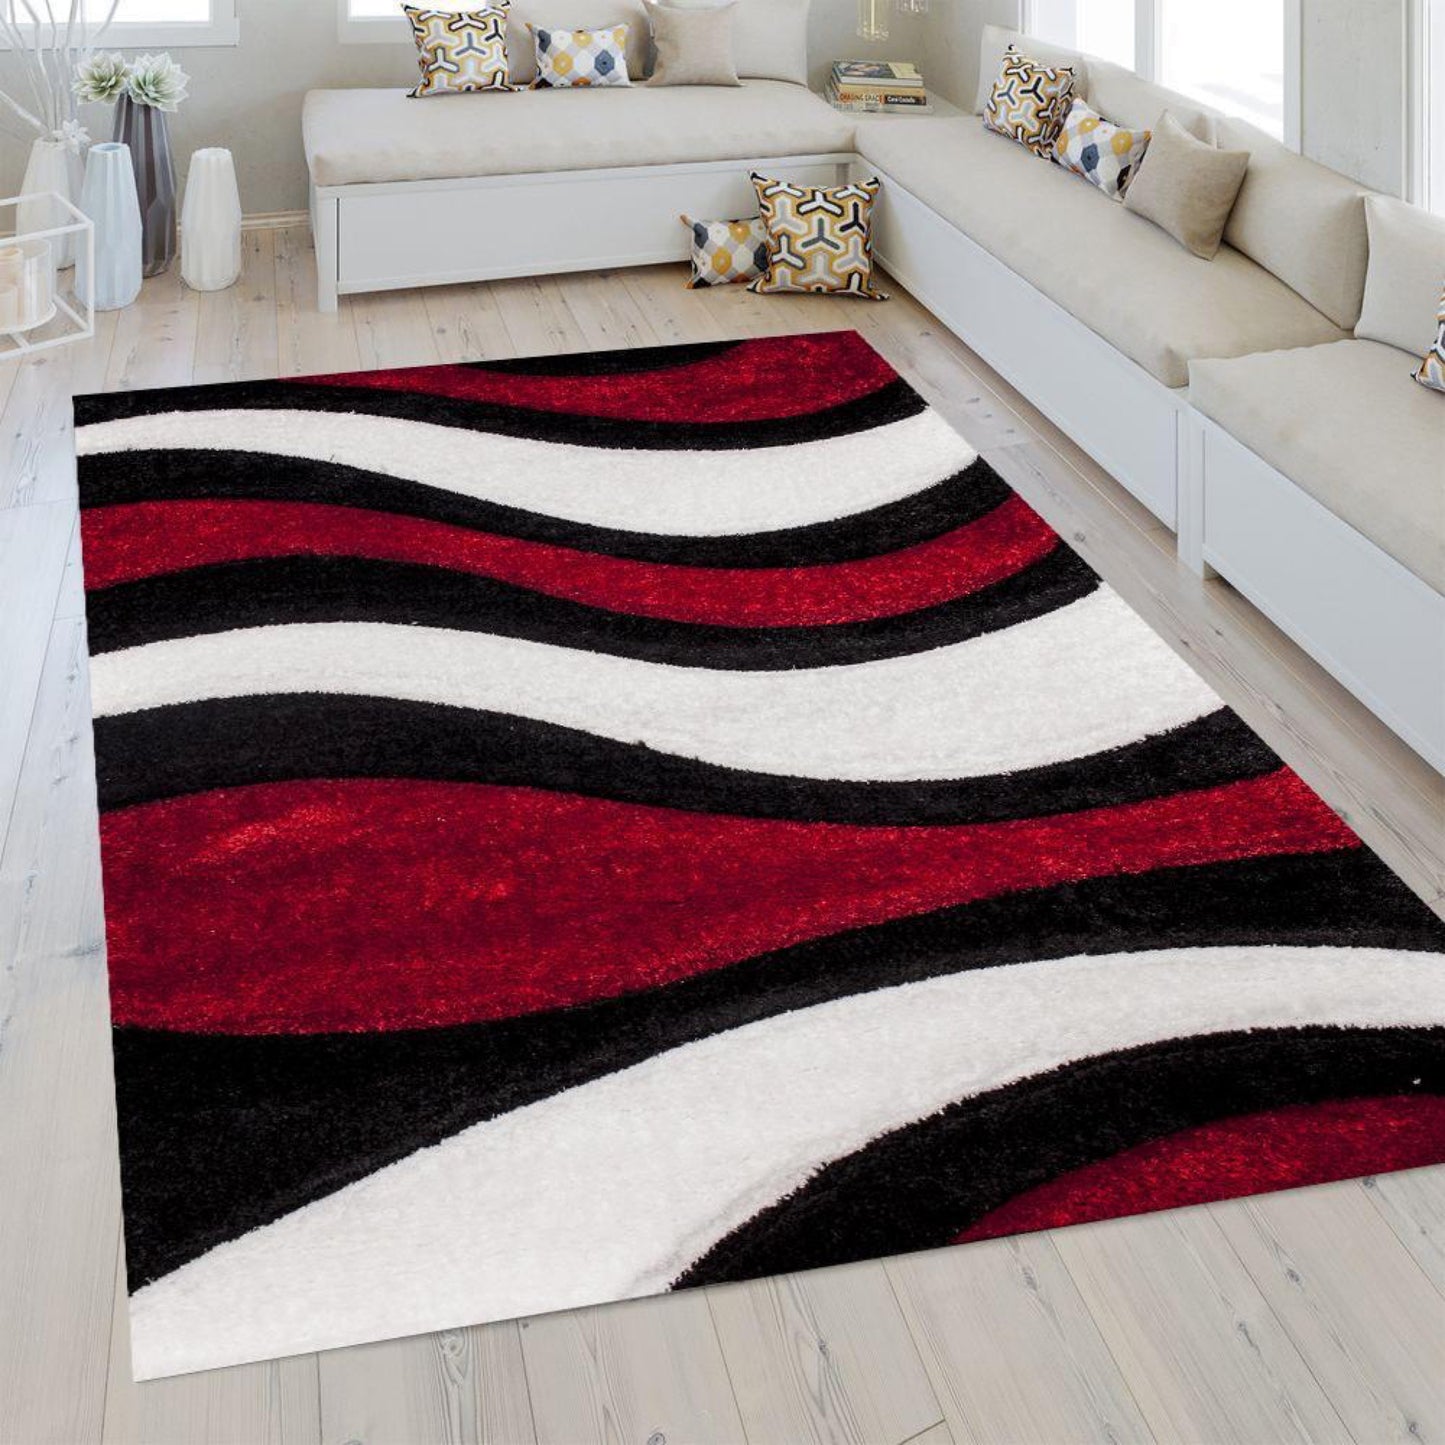 Plush Fluffy Shine 3D Wave Red White Black Shag Area Rug/Carpet